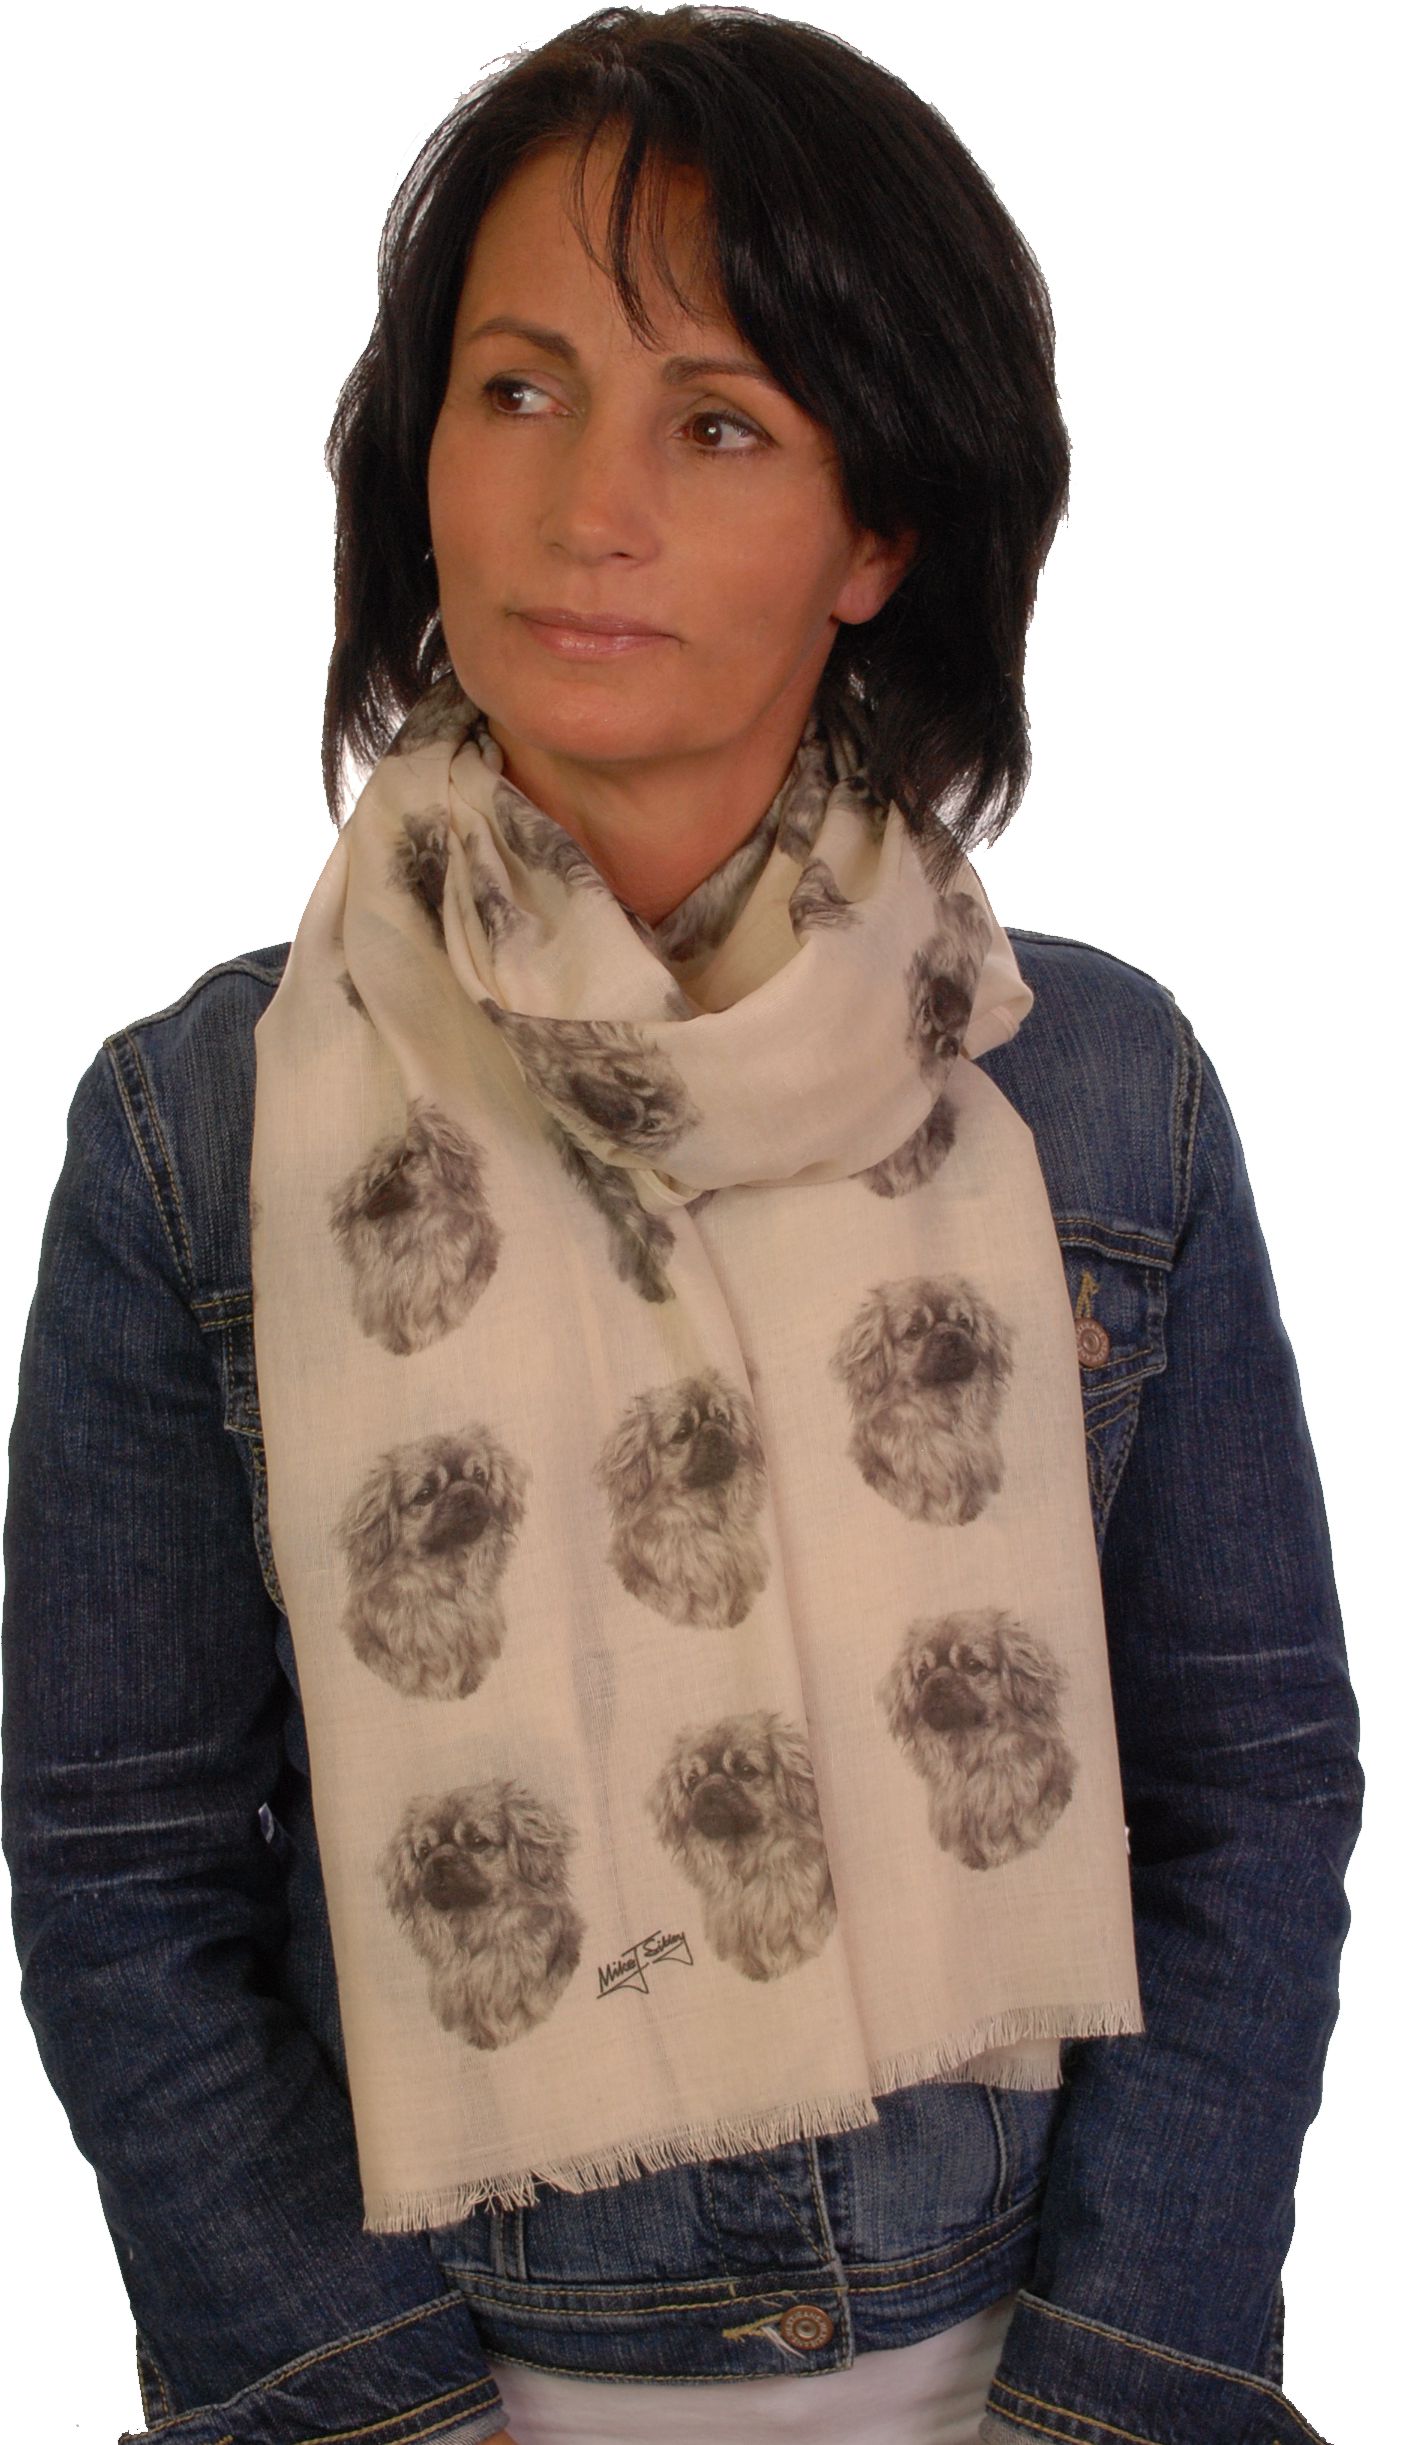 Mike Sibley Tibetan Spaniel licensed design ladies fashion scarf